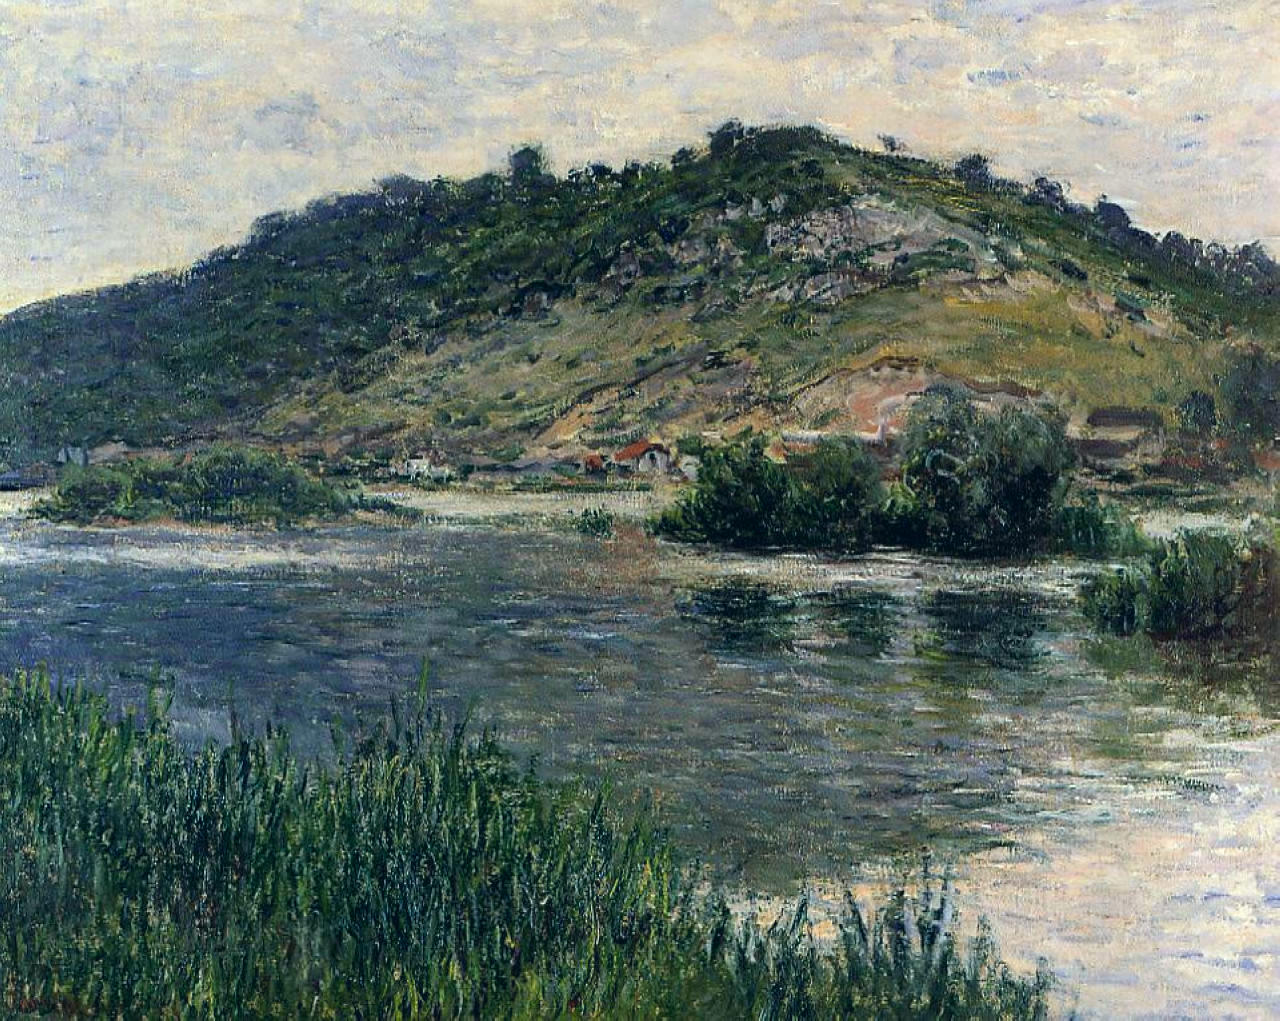 Claude+Monet-1840-1926 (395).jpg